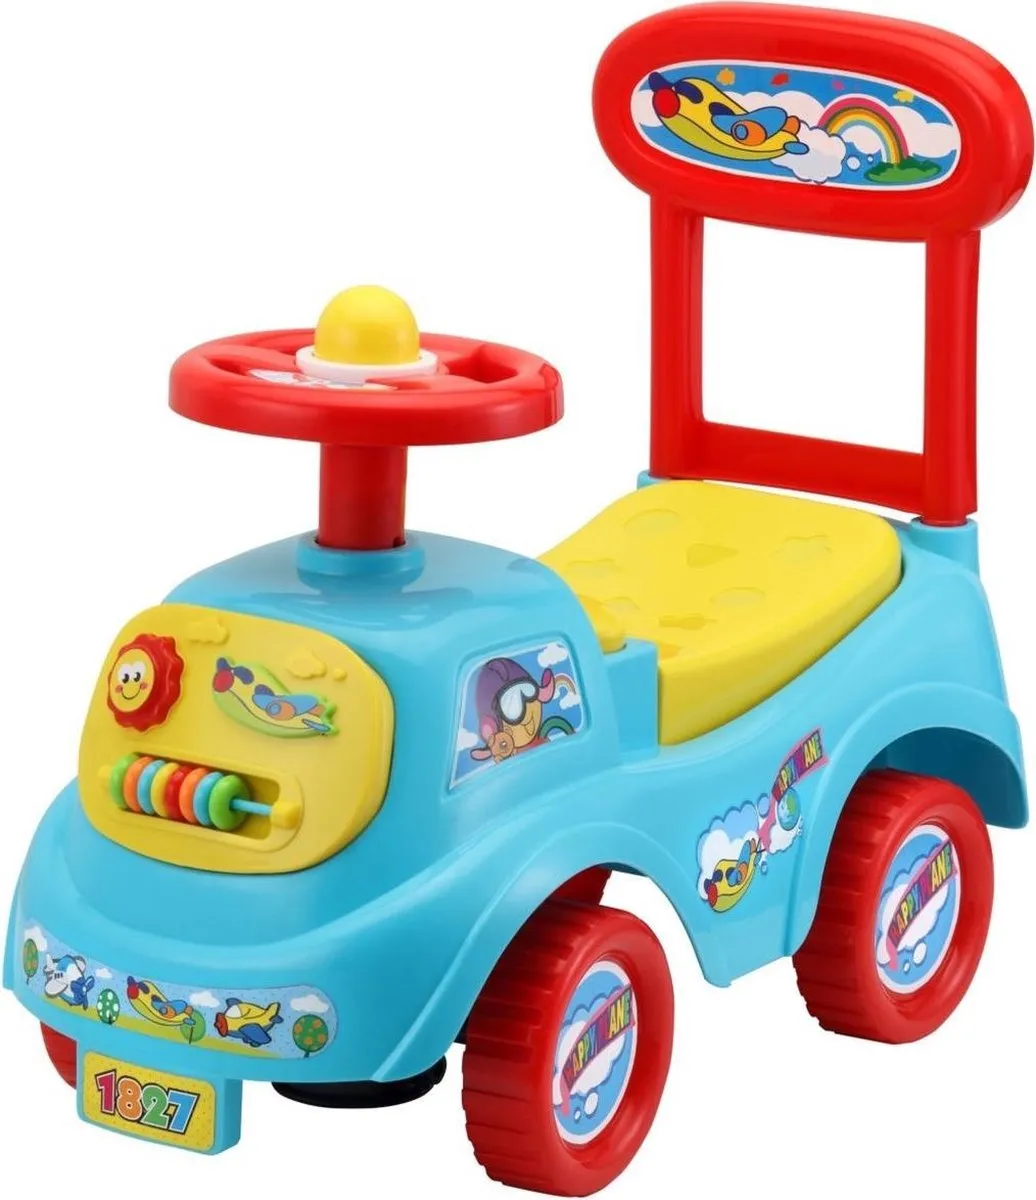 Free2Move Loopauto Kid's Rider - Blue Airplane speelgoed